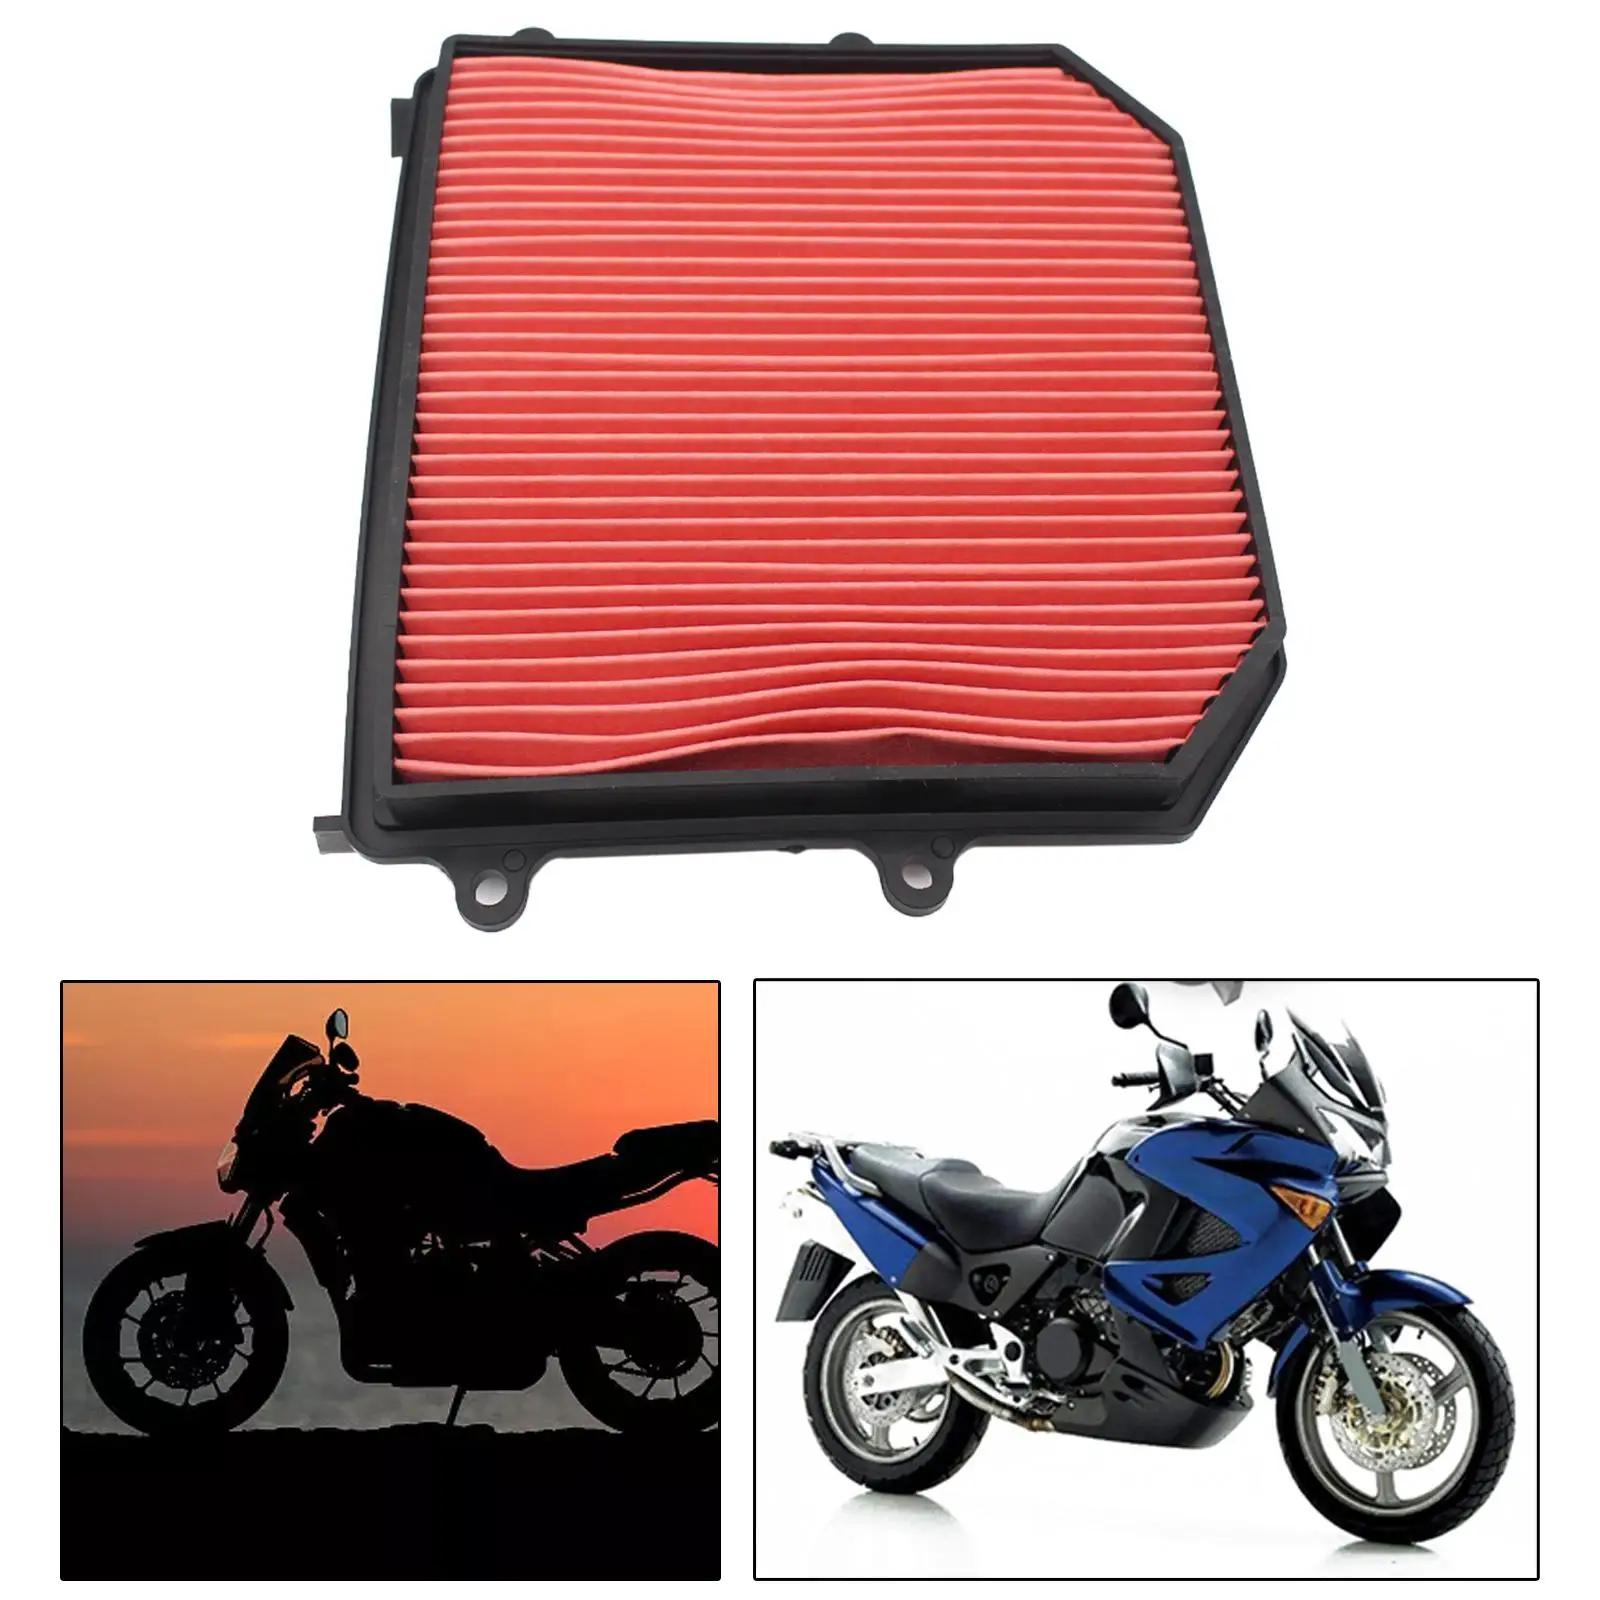 Motorcycle Air Filter Cleaner Fit for XL1000V 03-11 17210-Mbt-D20